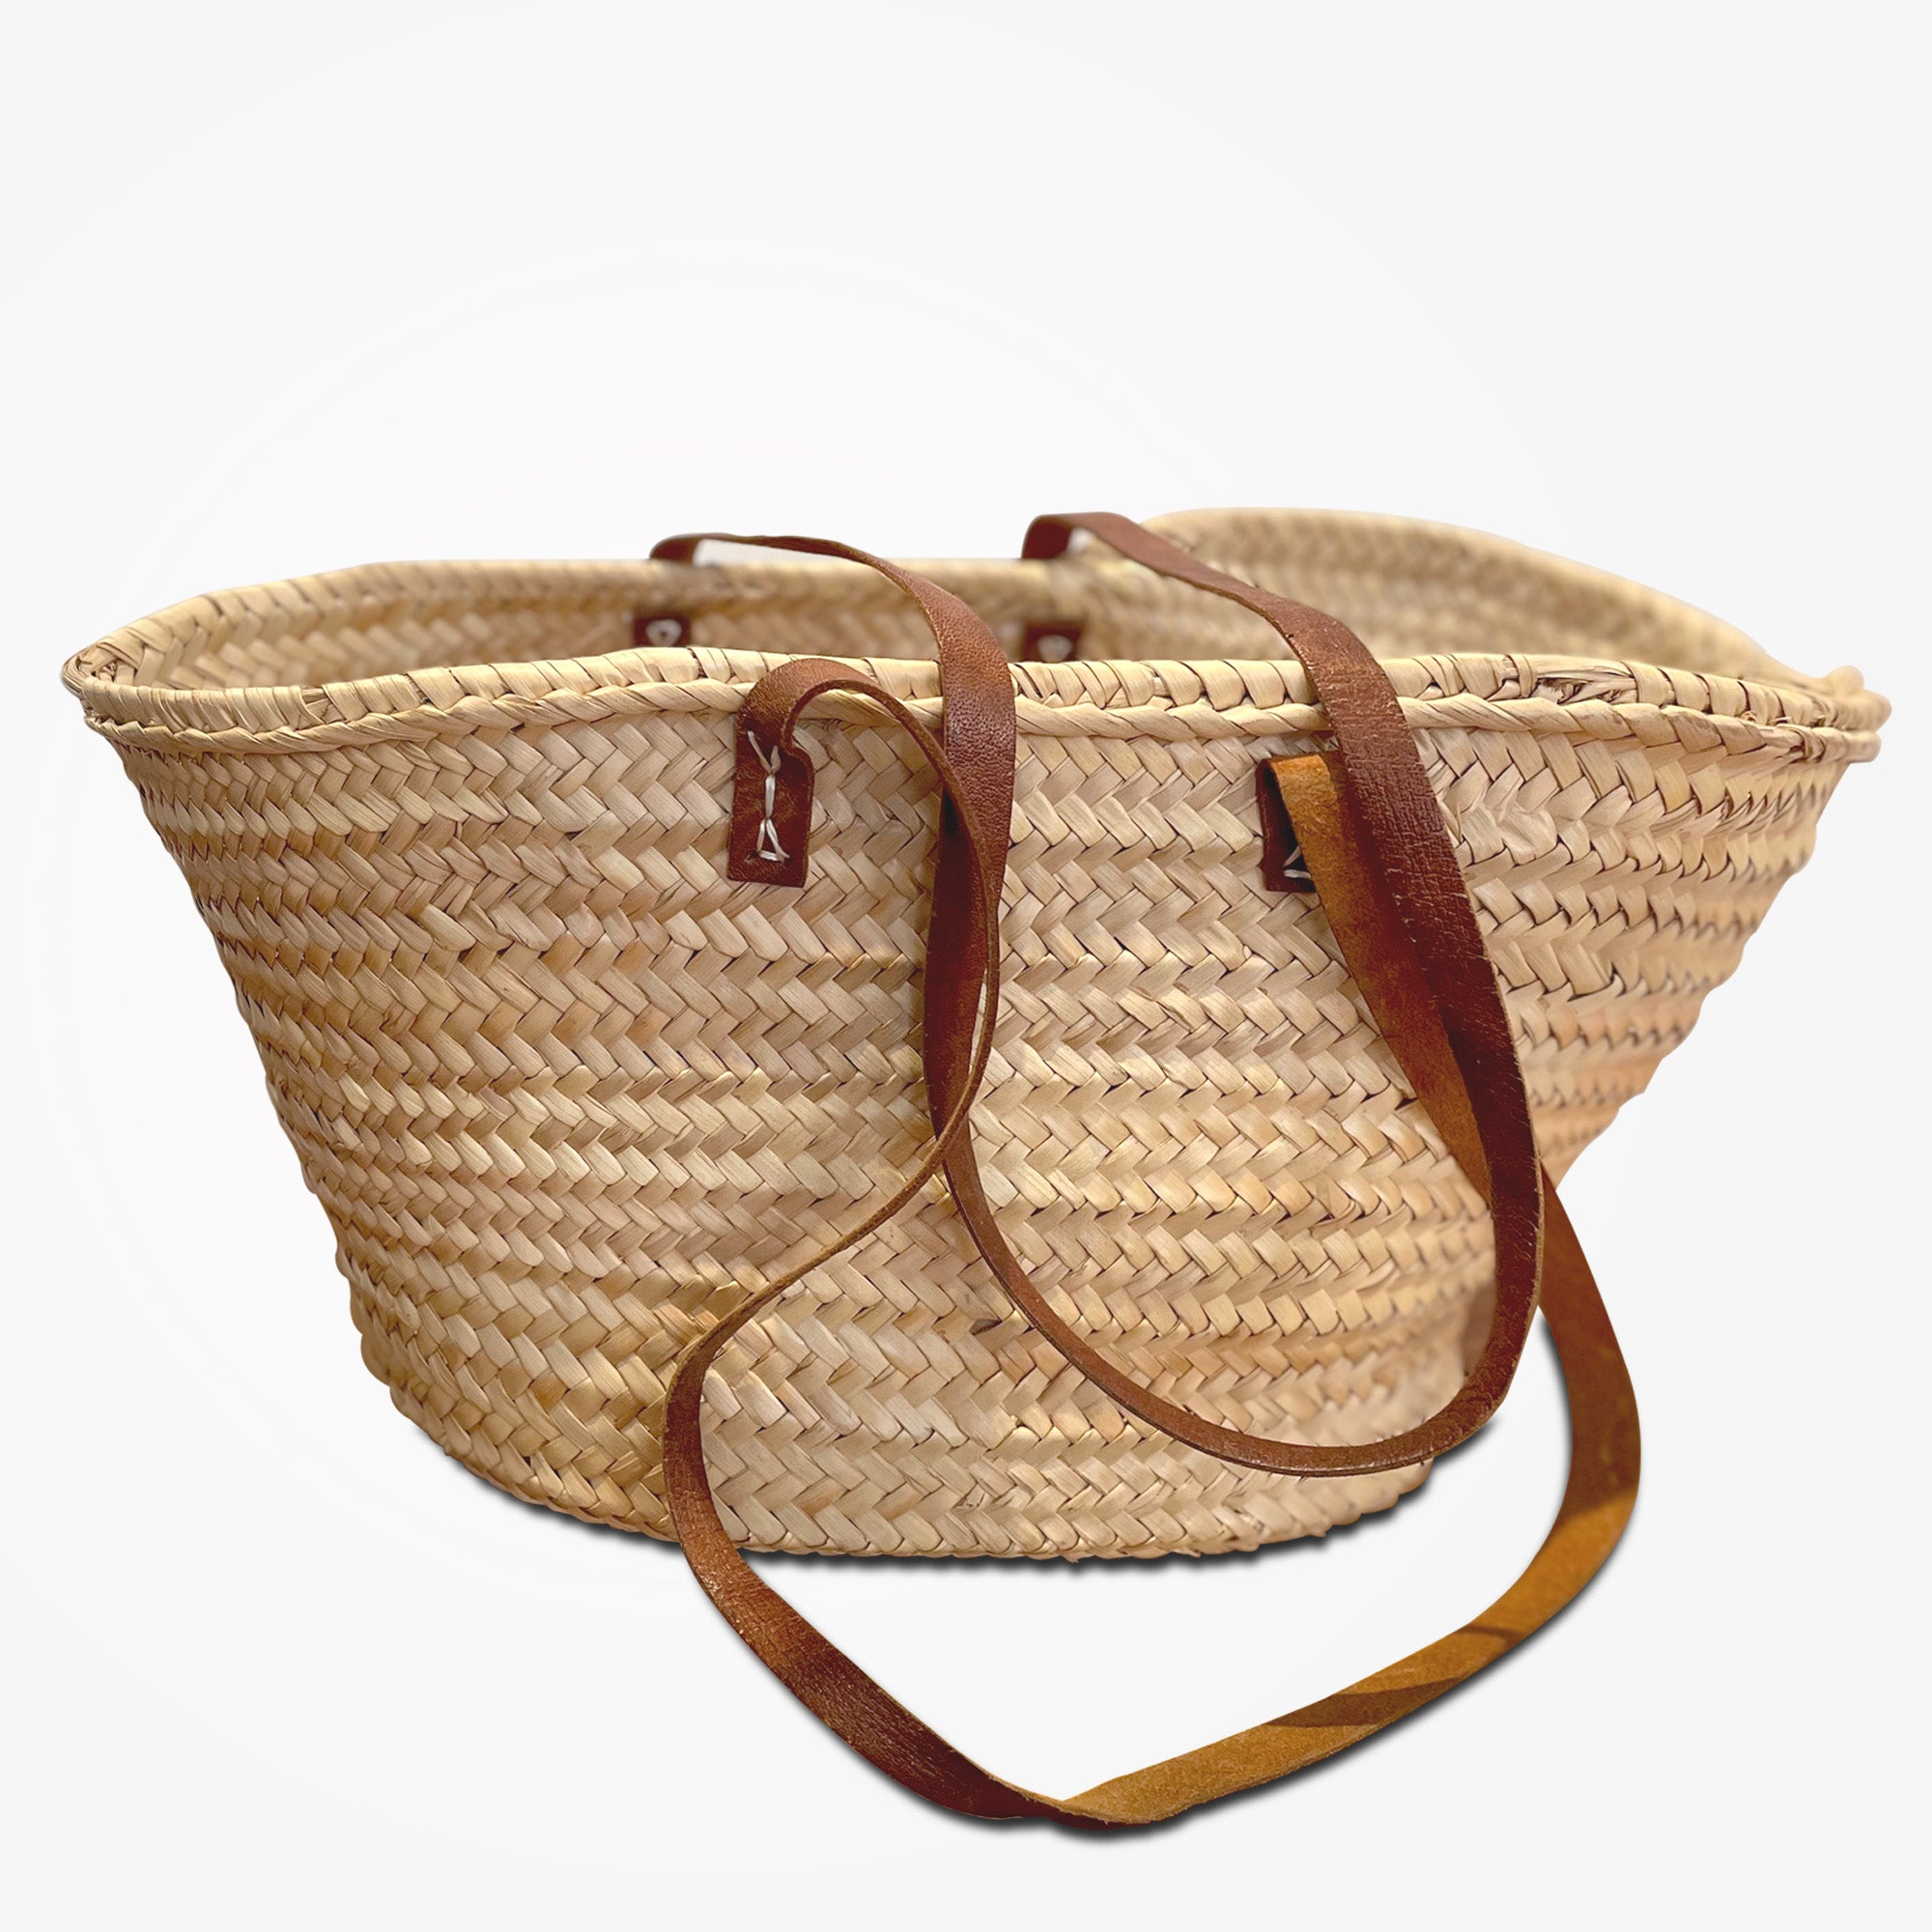 French Market Basket Bag / Straw Tote Bag / Summer Bag / Beach 